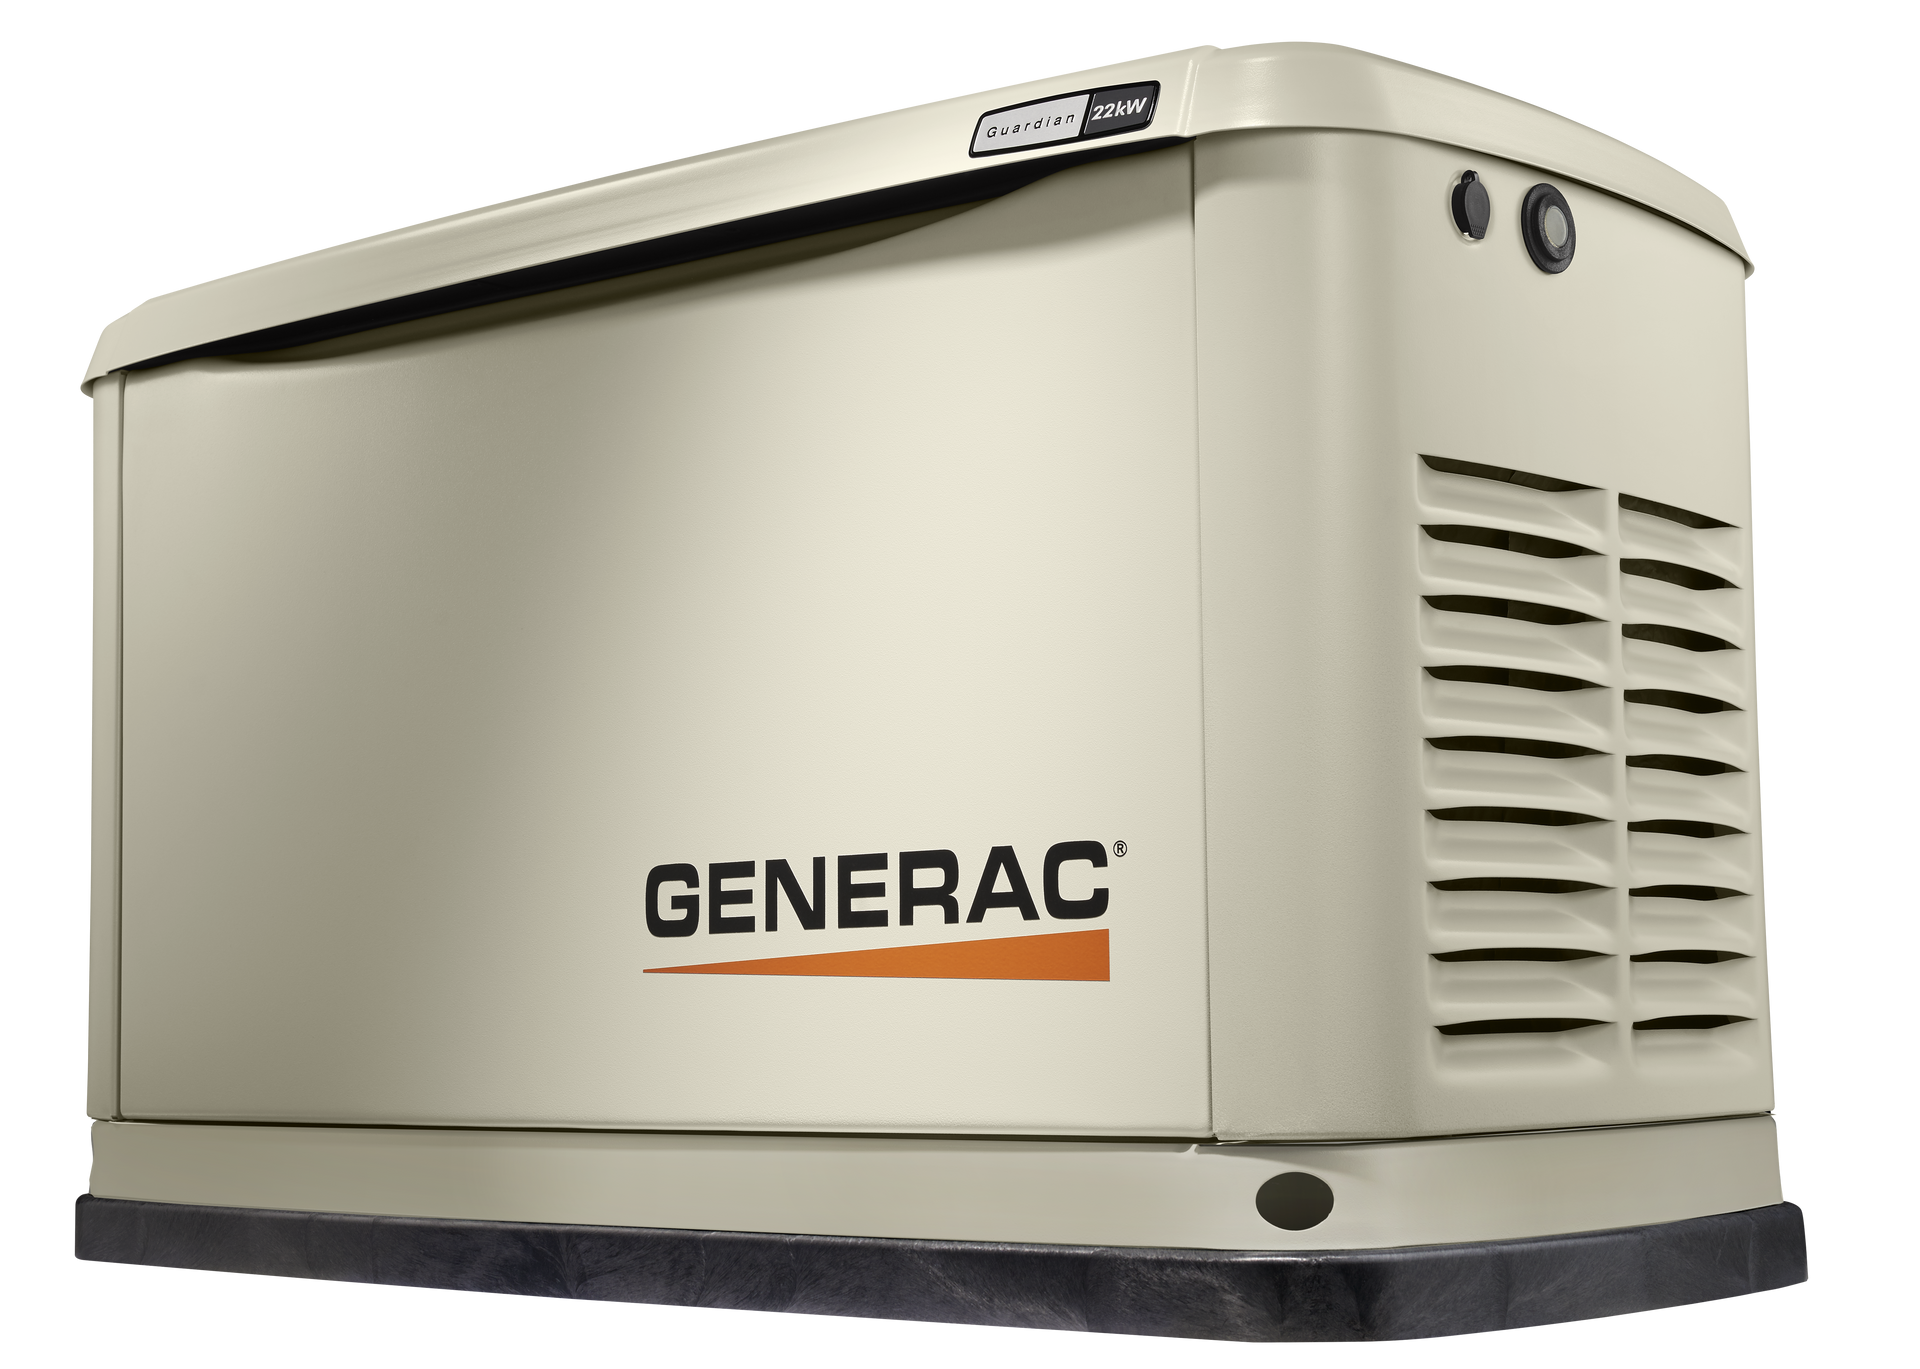 Pictured, Generac Standby Generator